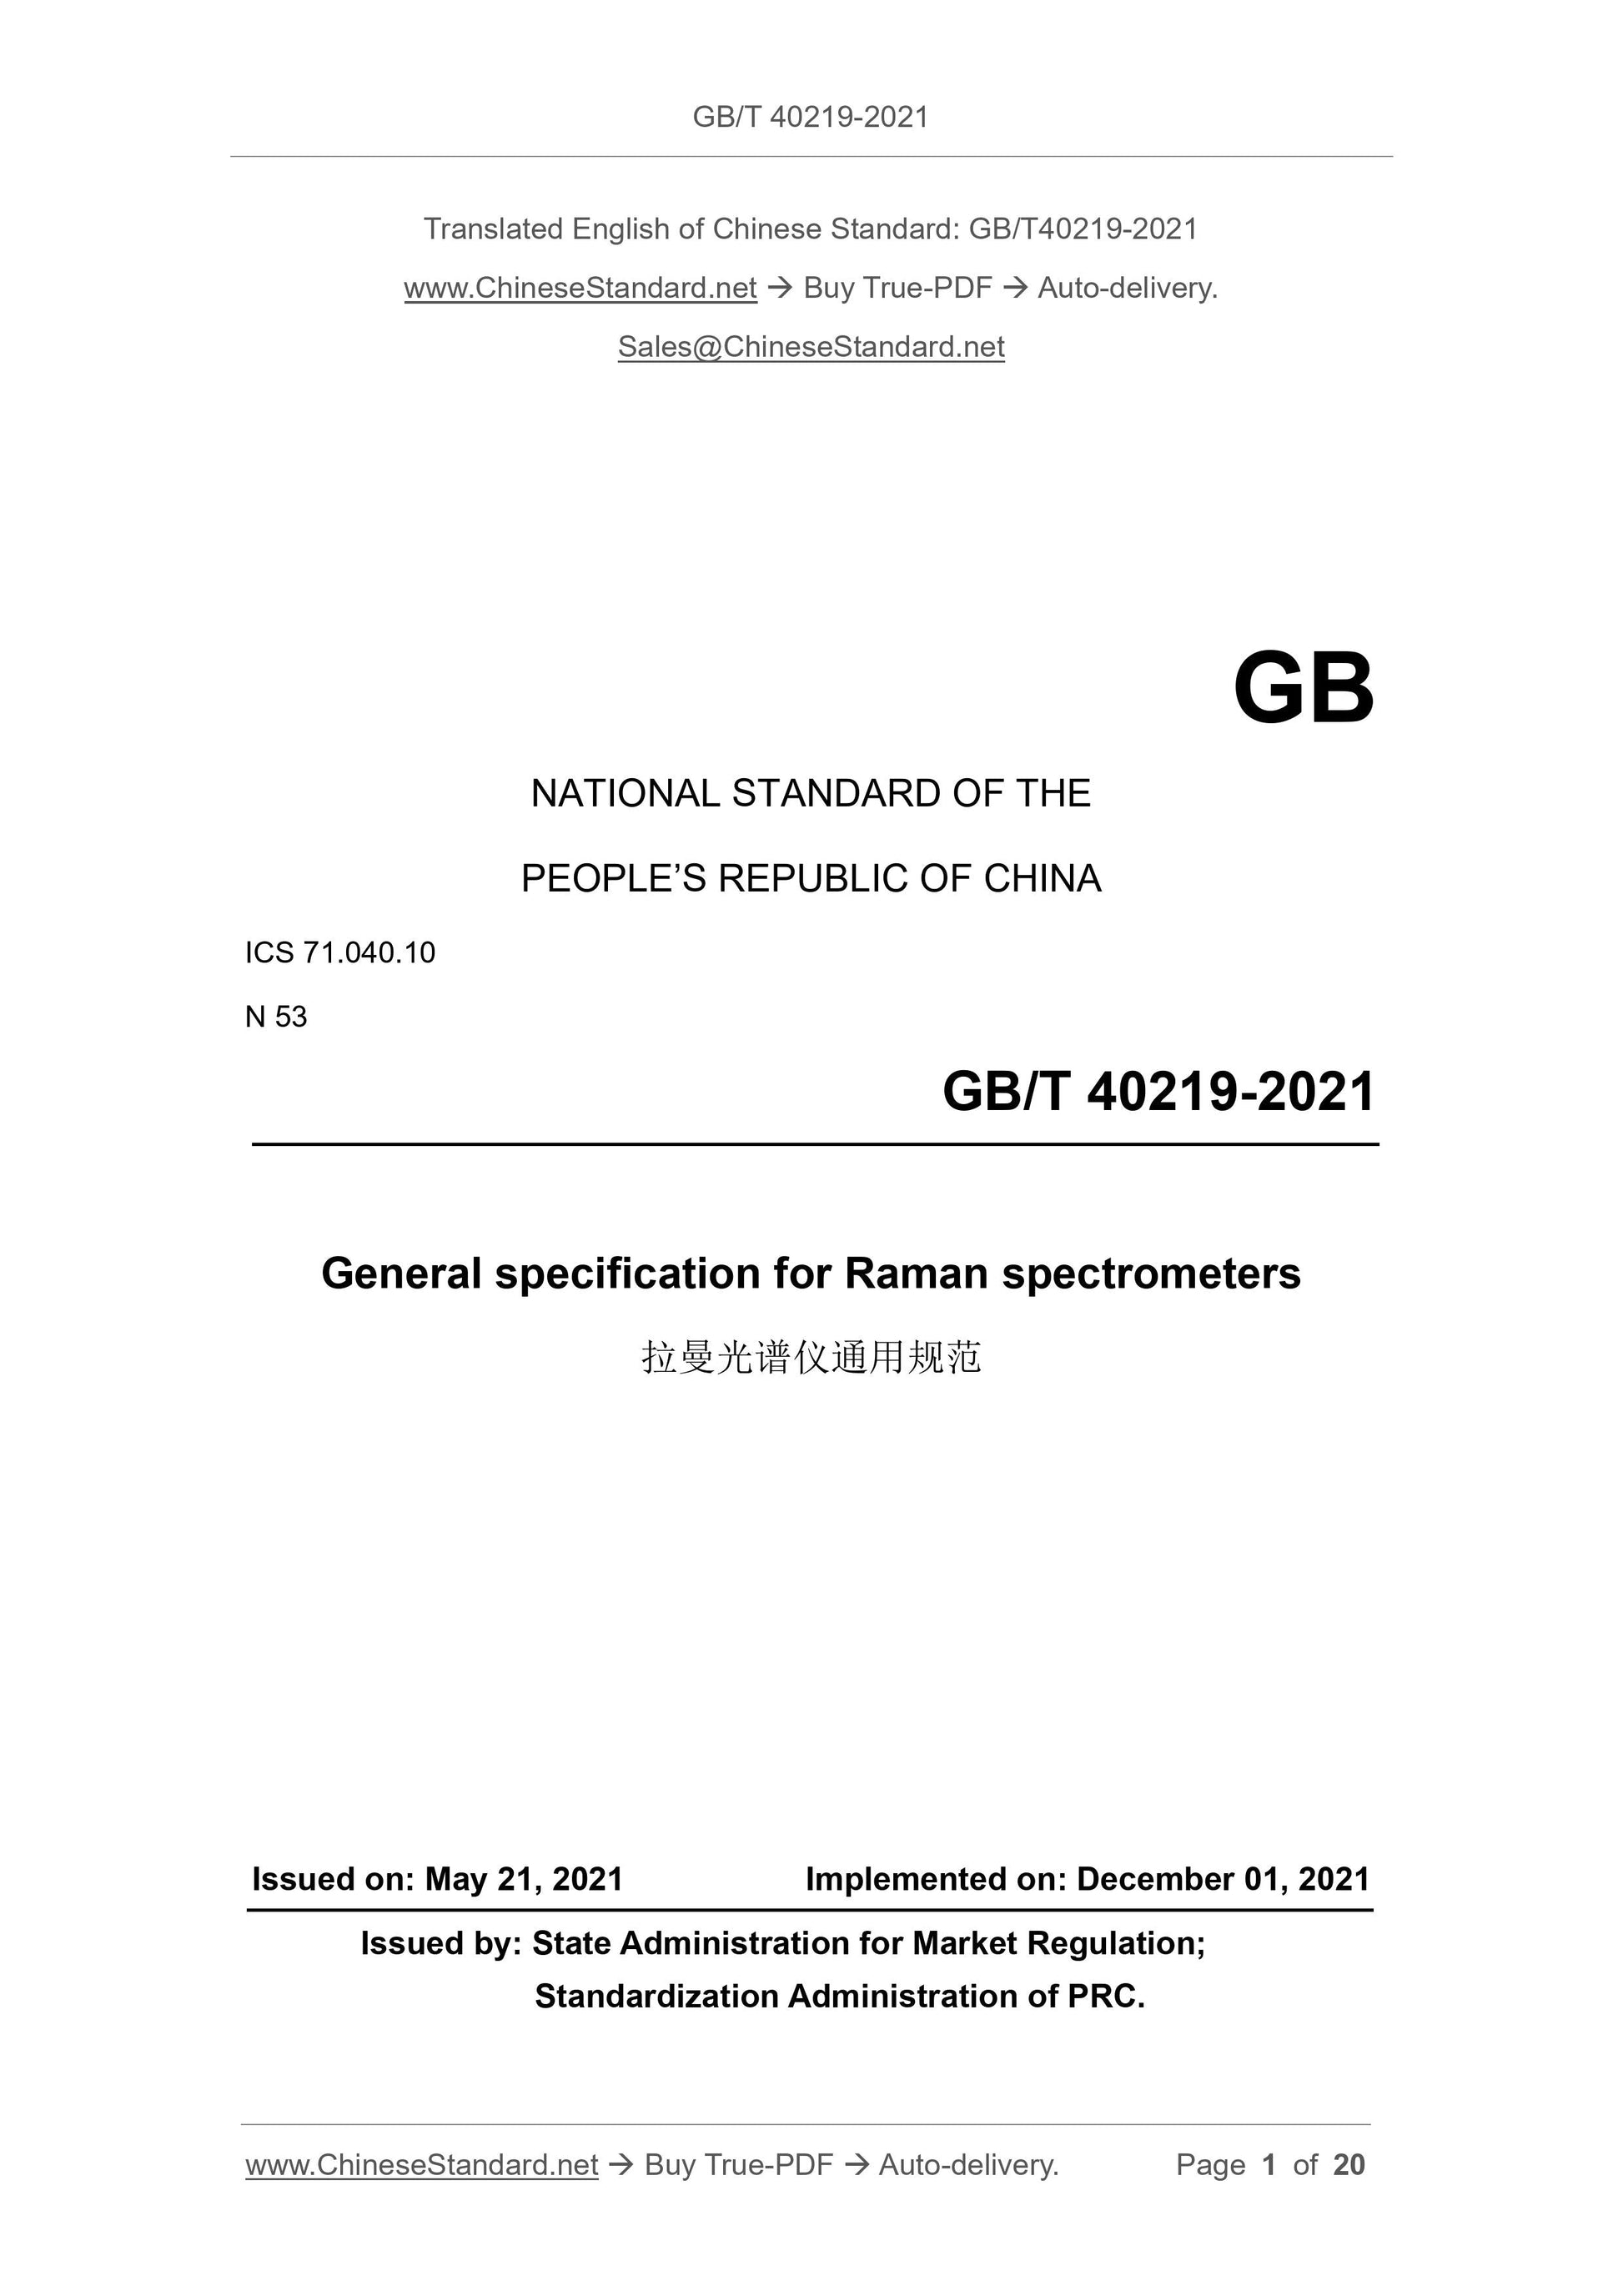 GBT40219-2021 Page 1